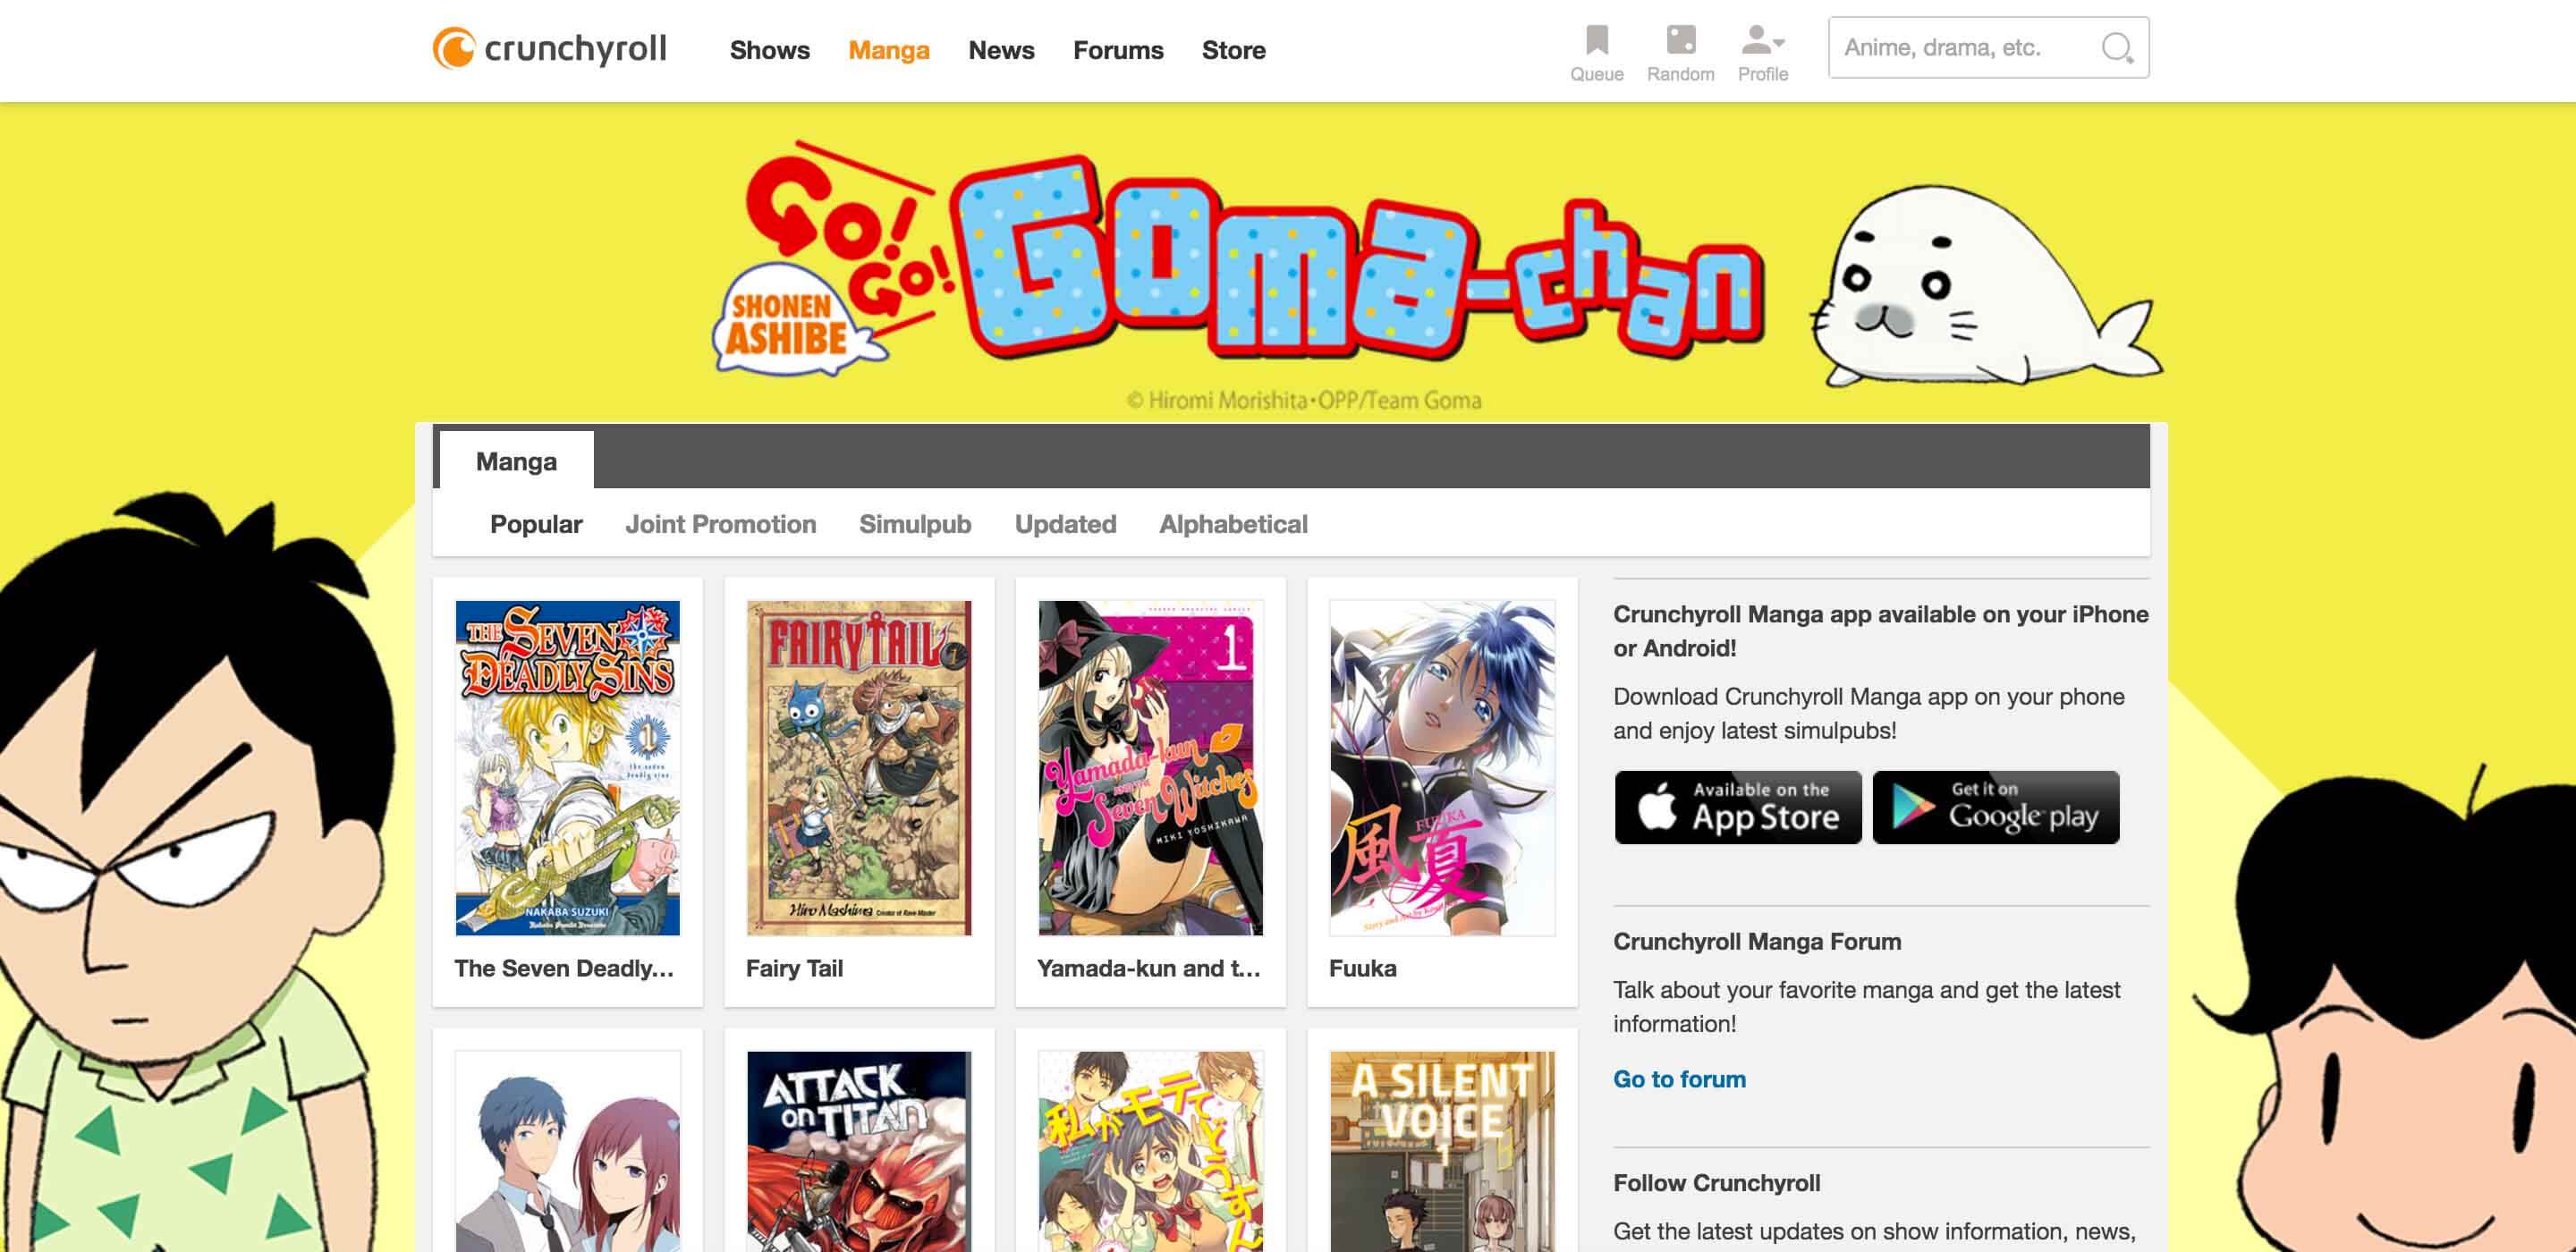 The Ultimate List of Legal Online Manga Sites - Crunchyroll